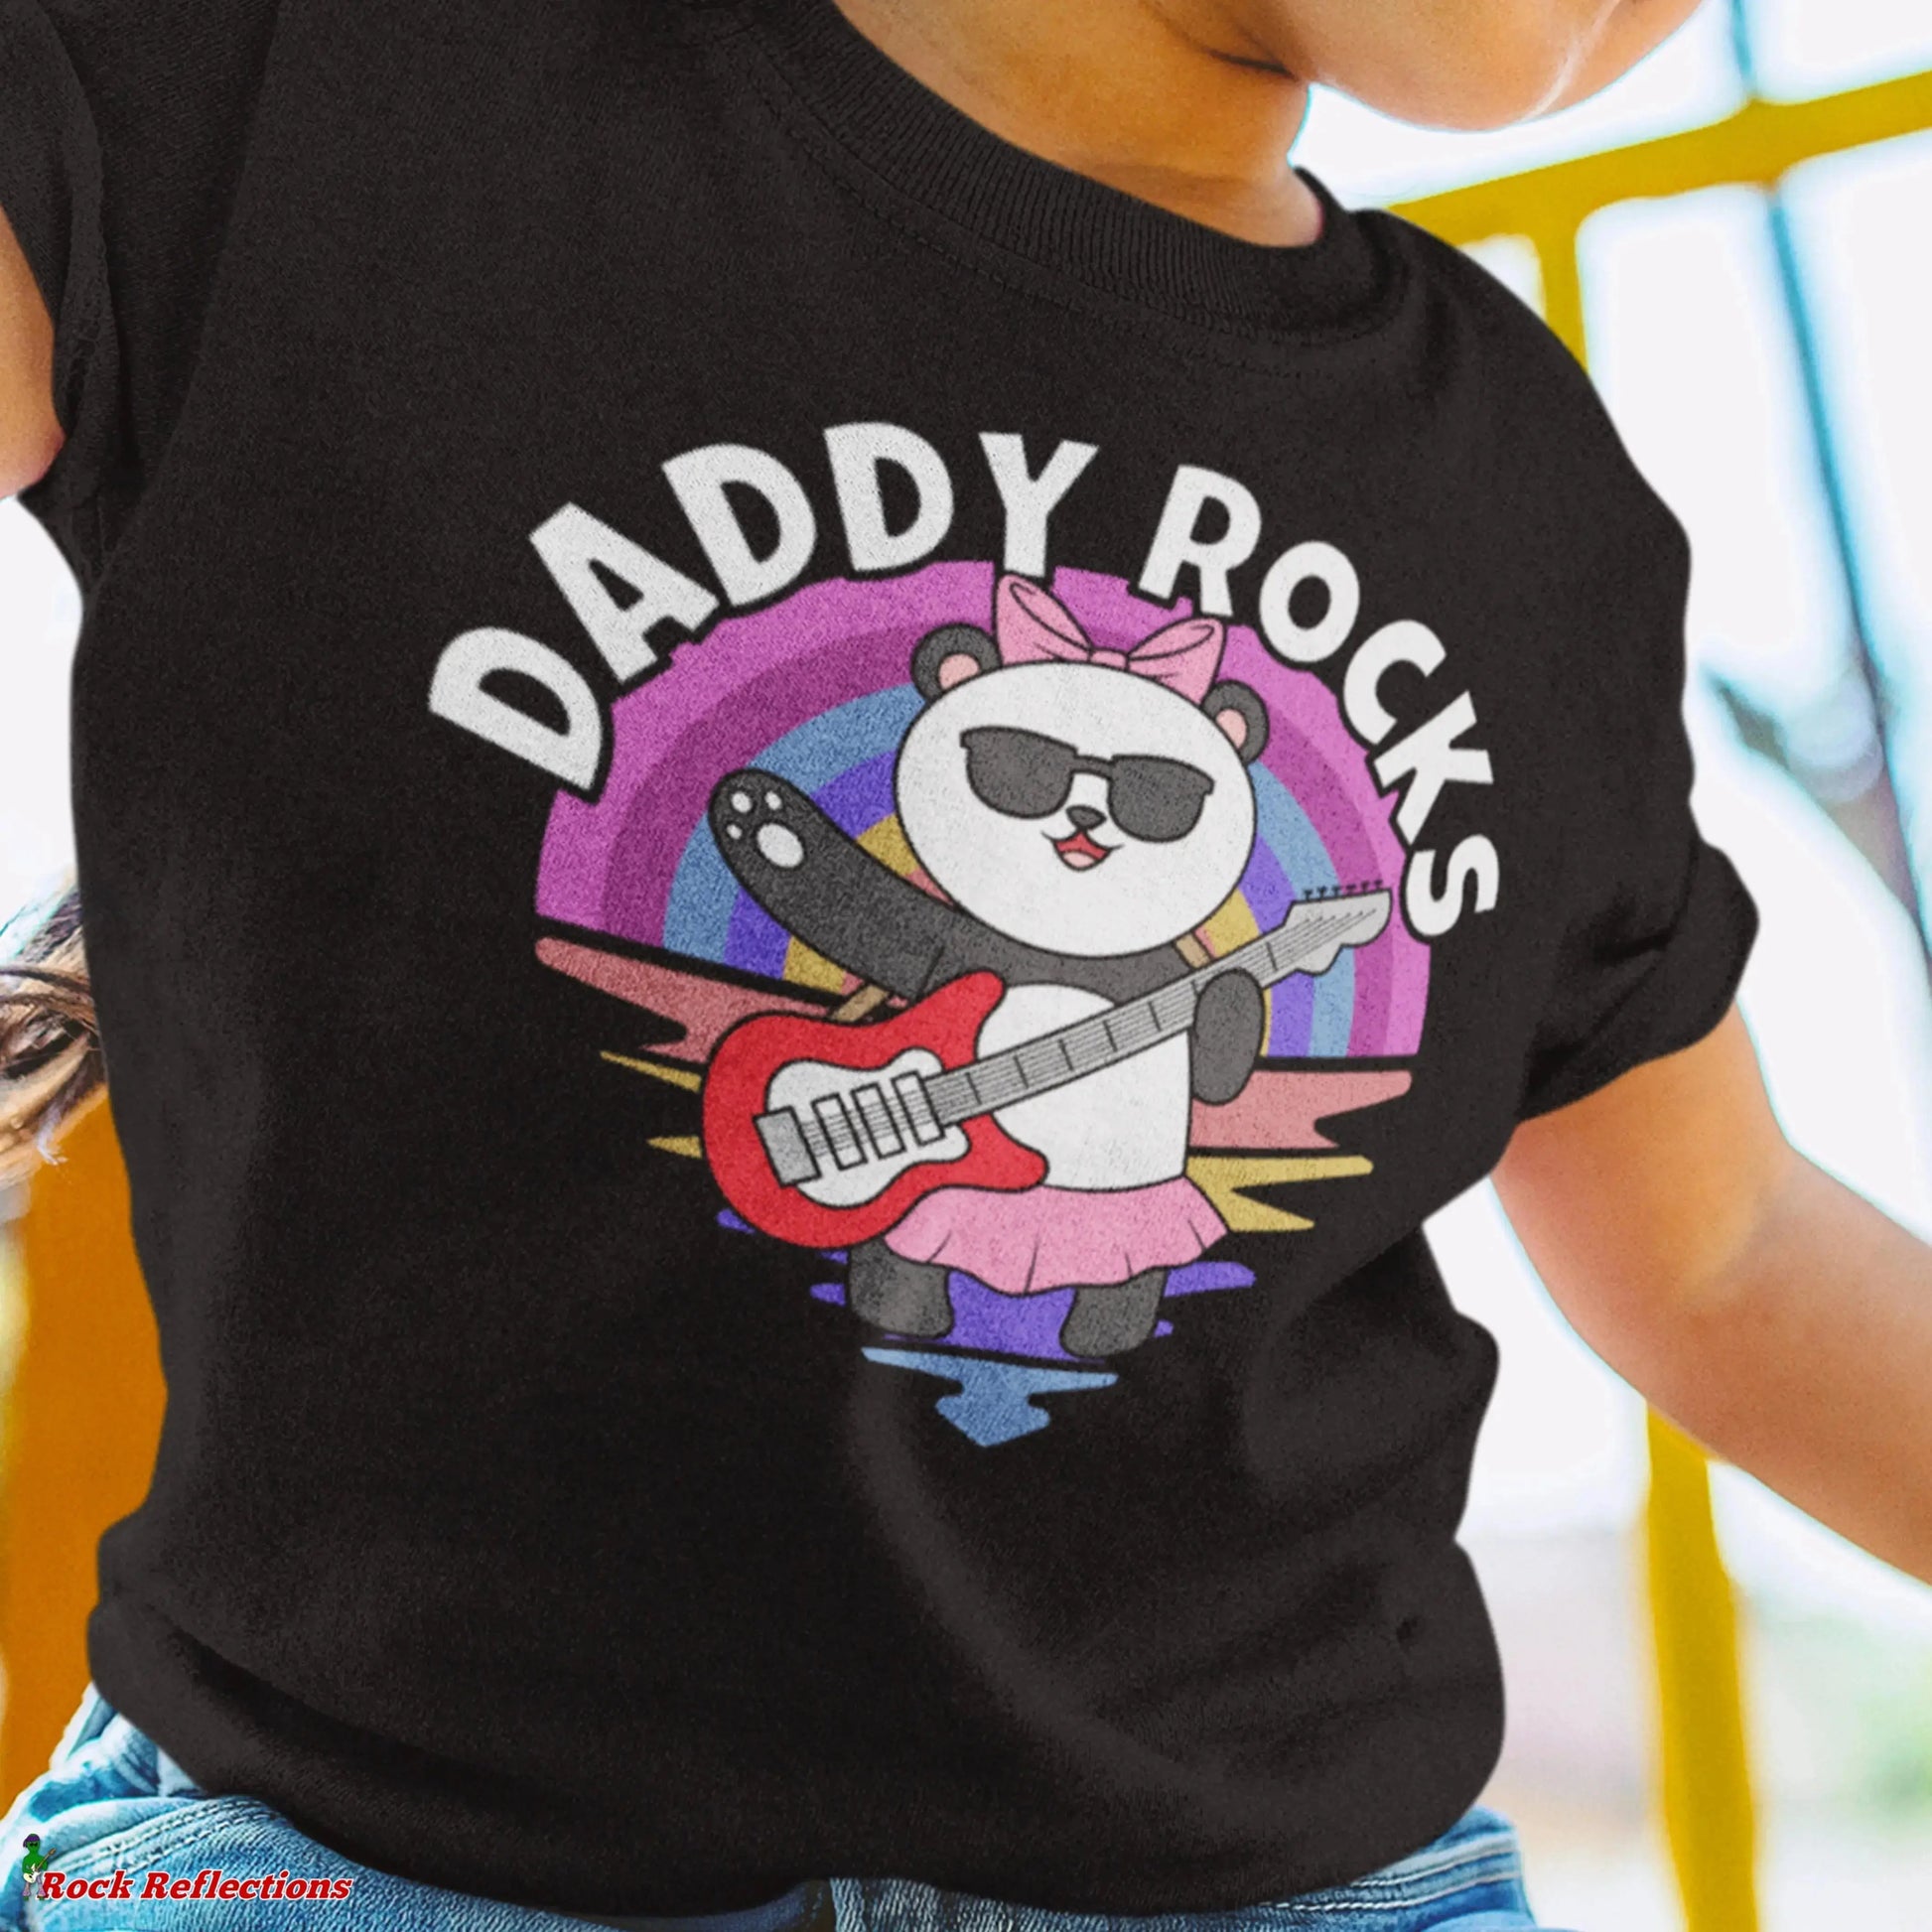 Daddy Rocks Panda SPOD